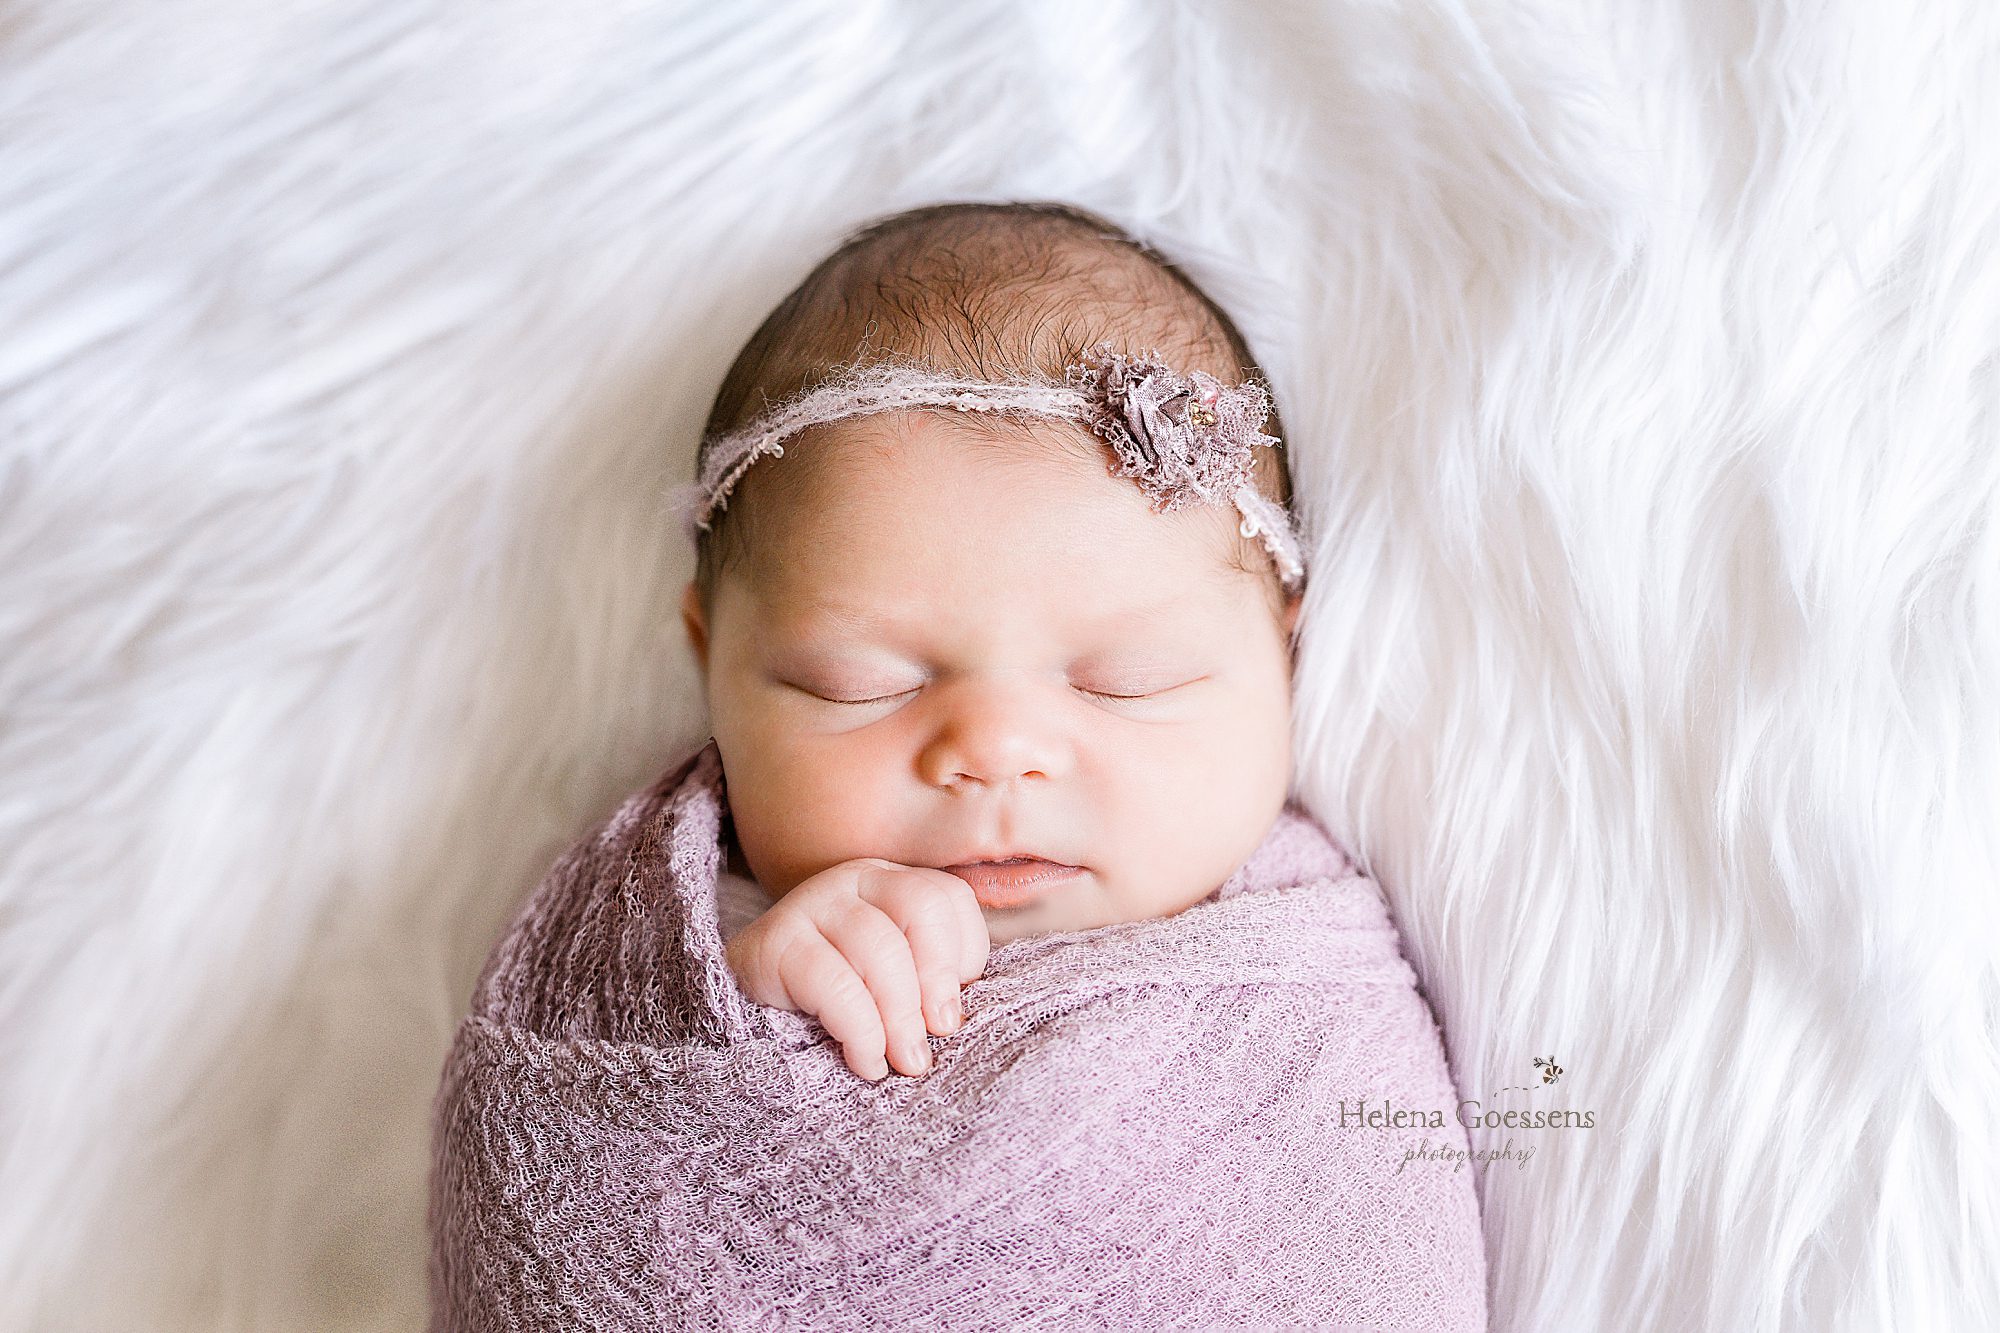 Boston newborn session with Helena Goessens Photography